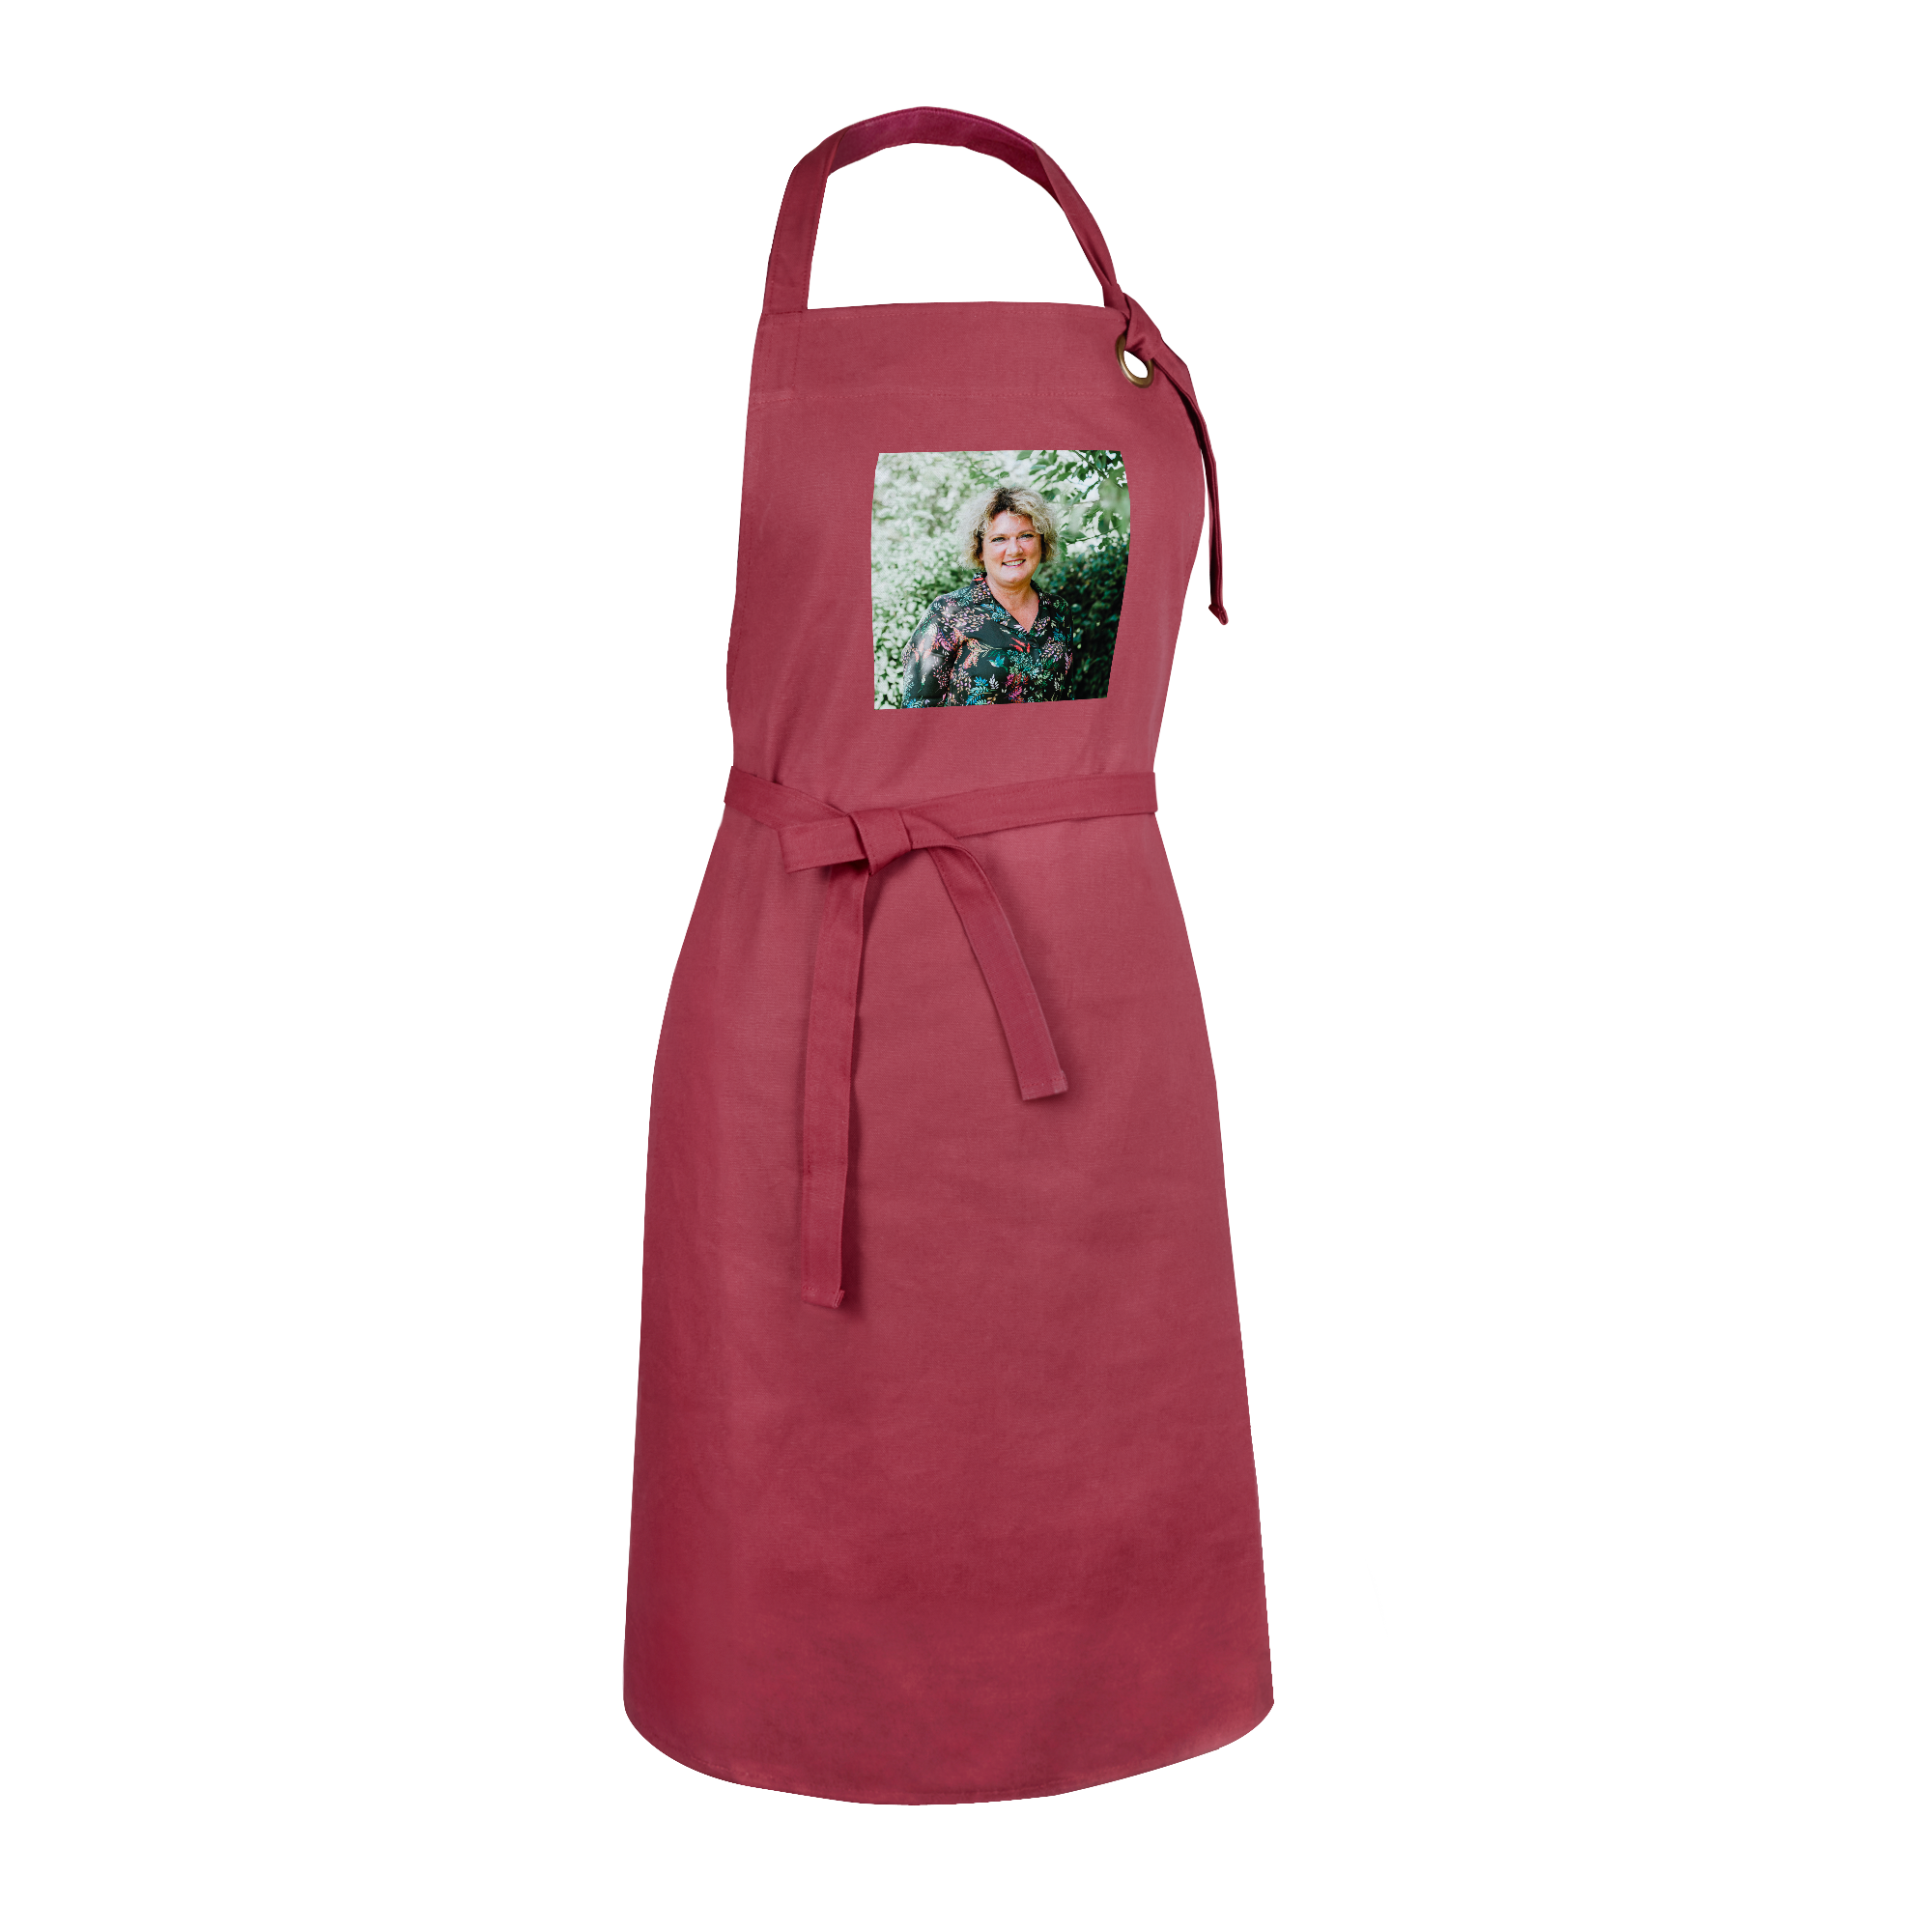 Kitchen apron - Burgundy